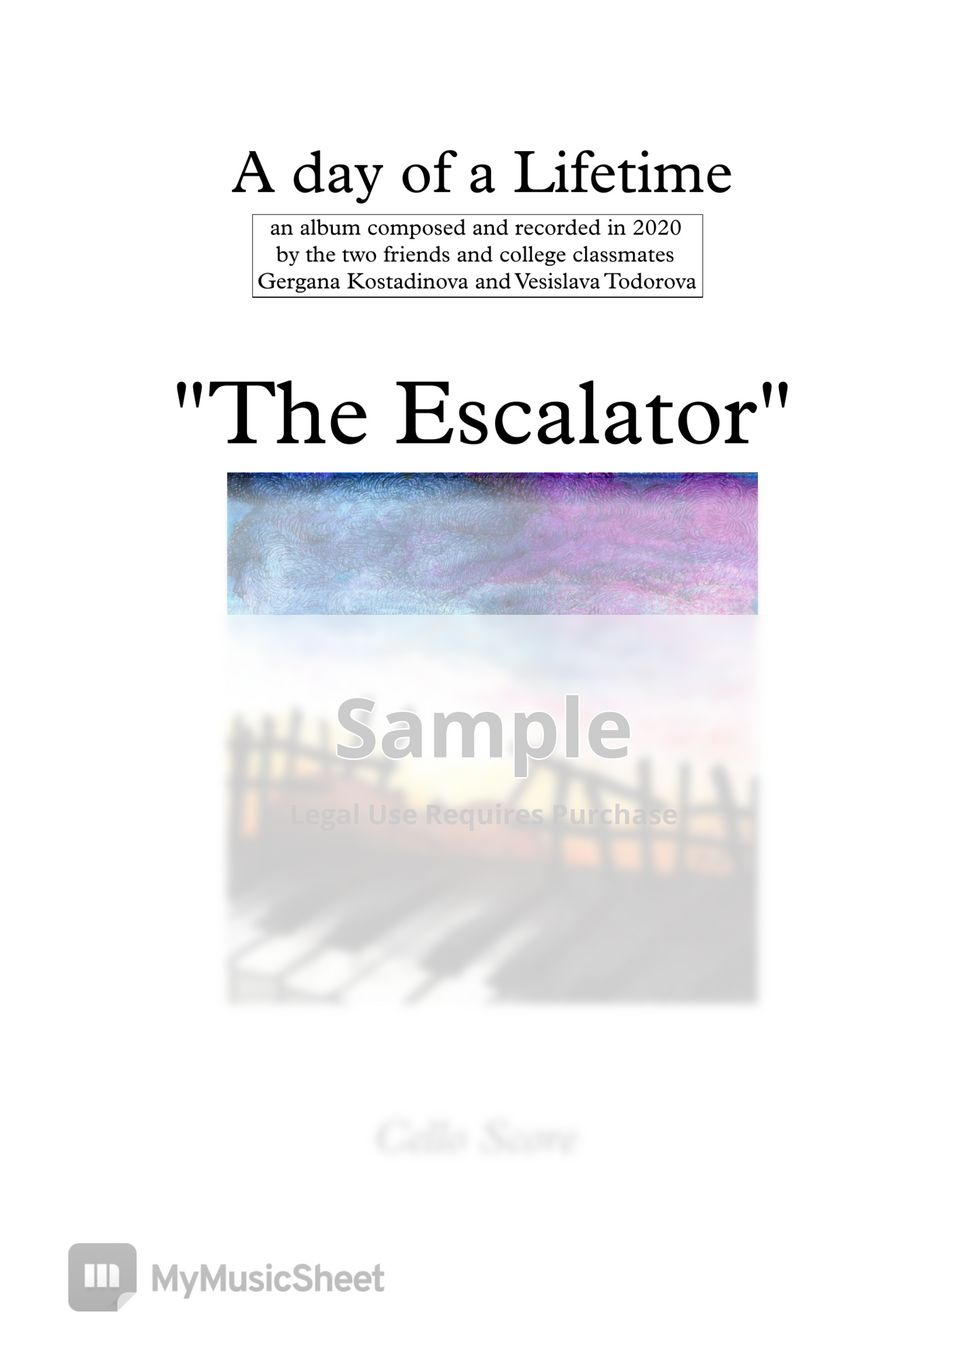 Vesislava & Gergana - The Escalator ["A day of a Lifetime" Album] (Cello & Piano)